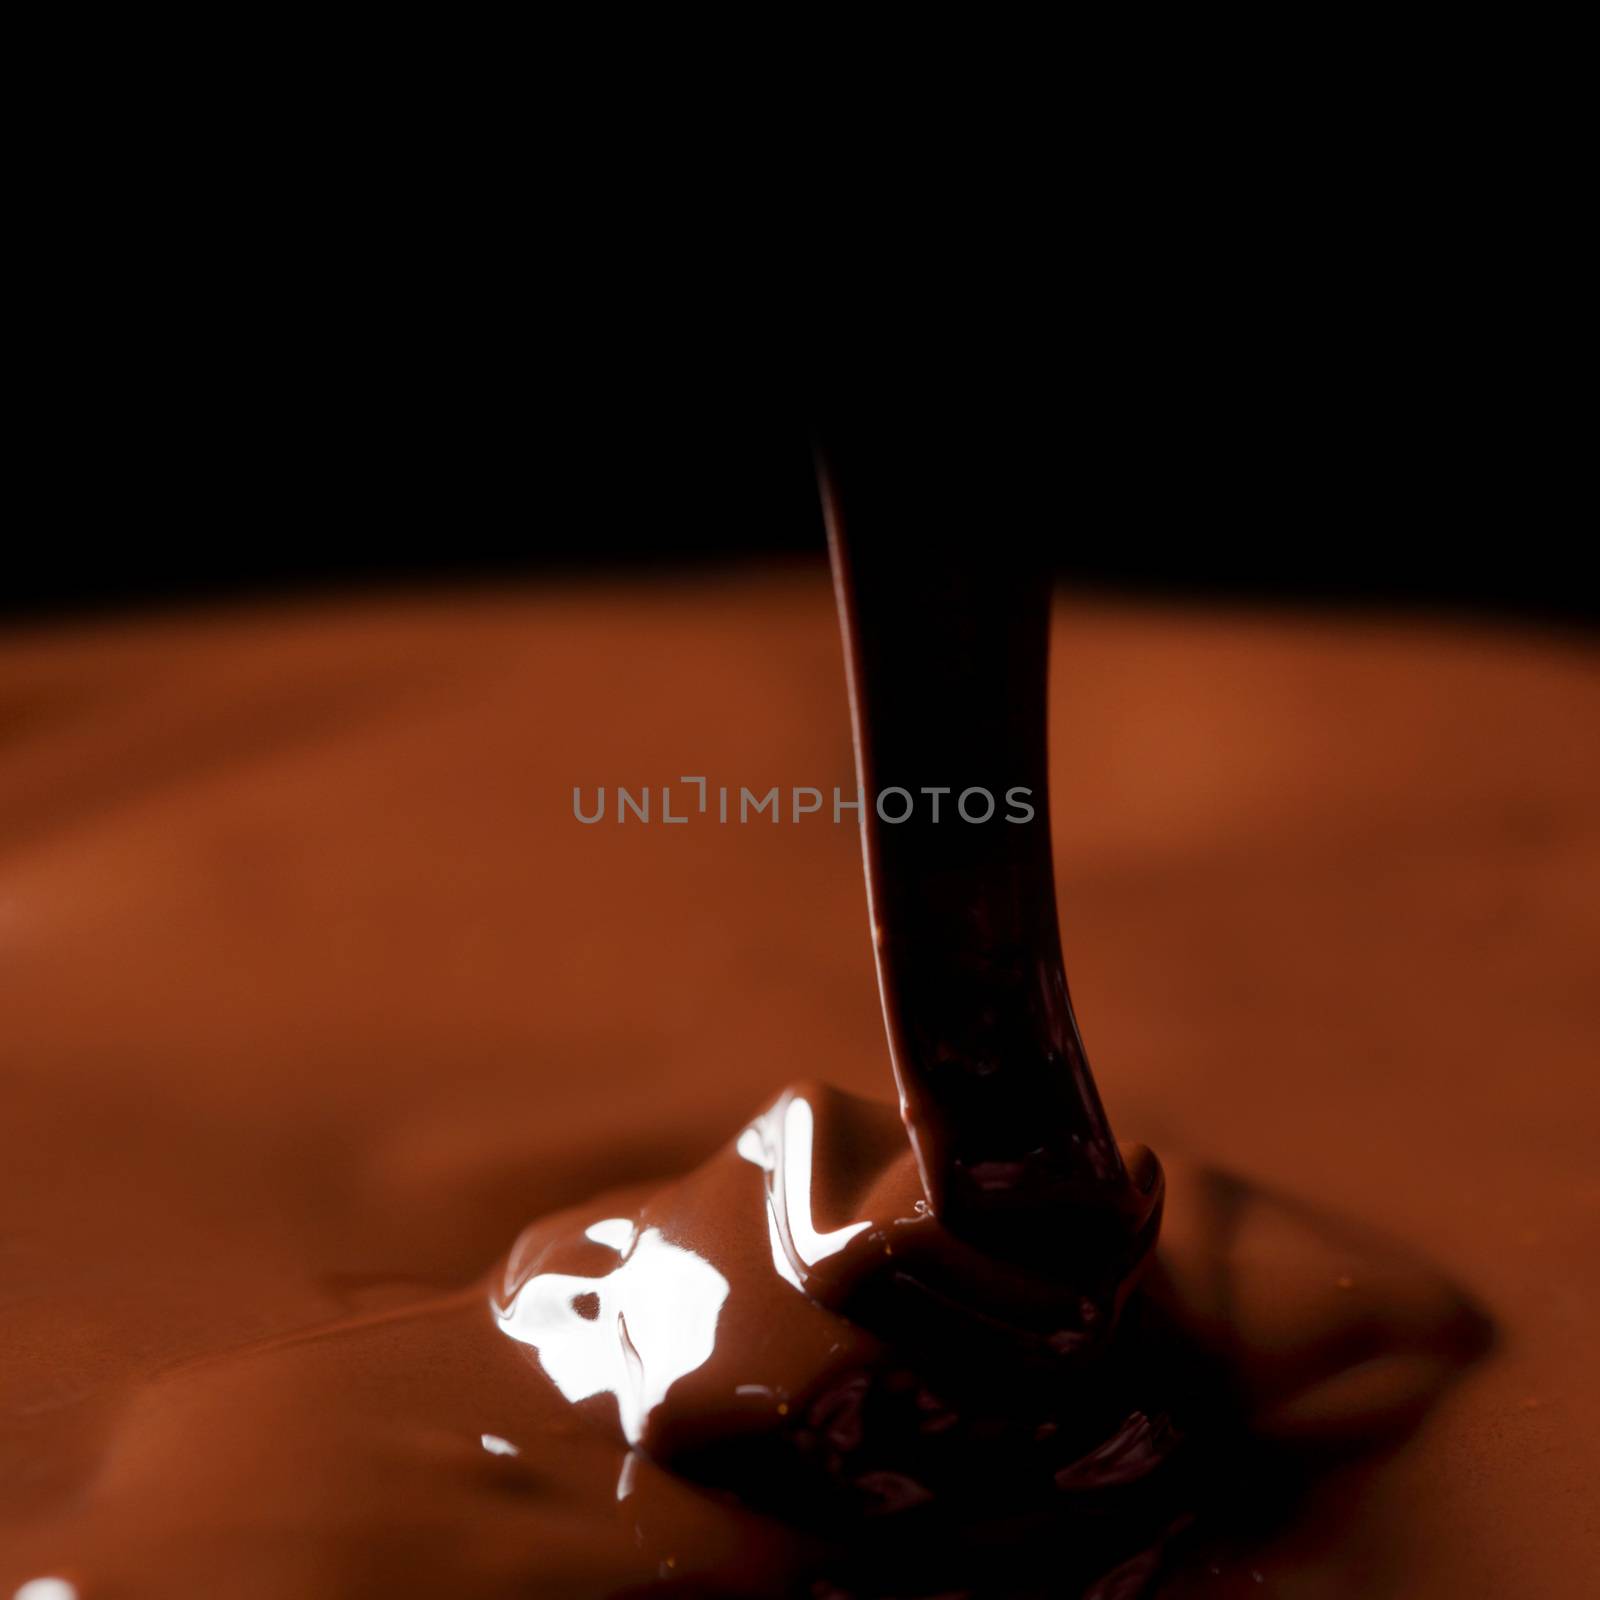 Hot melted chocolate flow on dark background